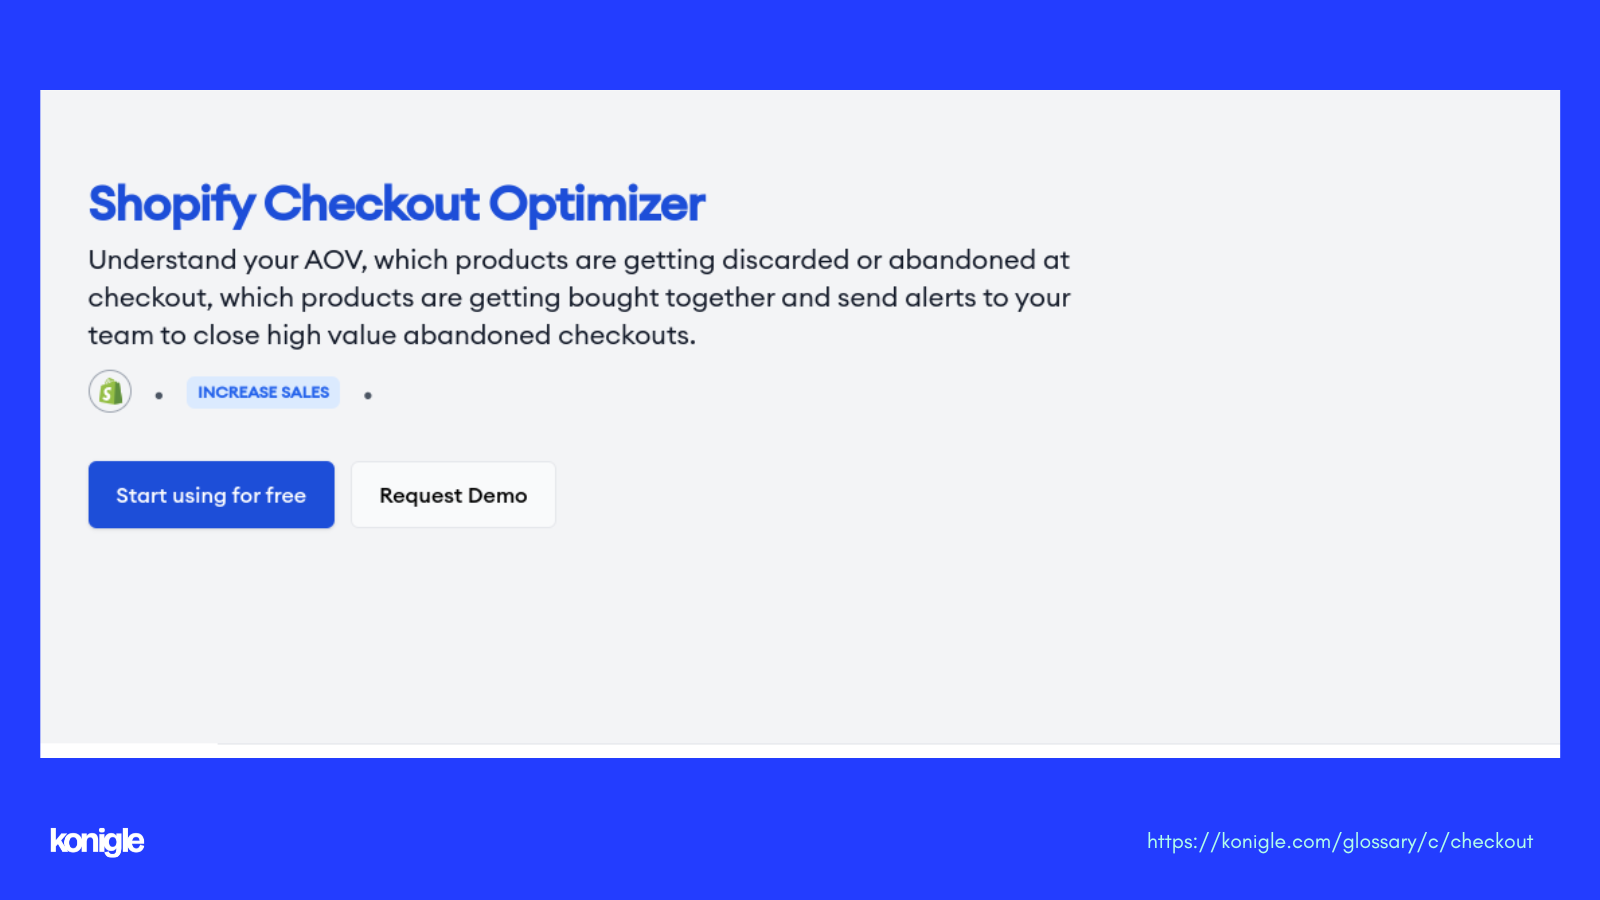 Konigle's shopify checkout optimizer tool